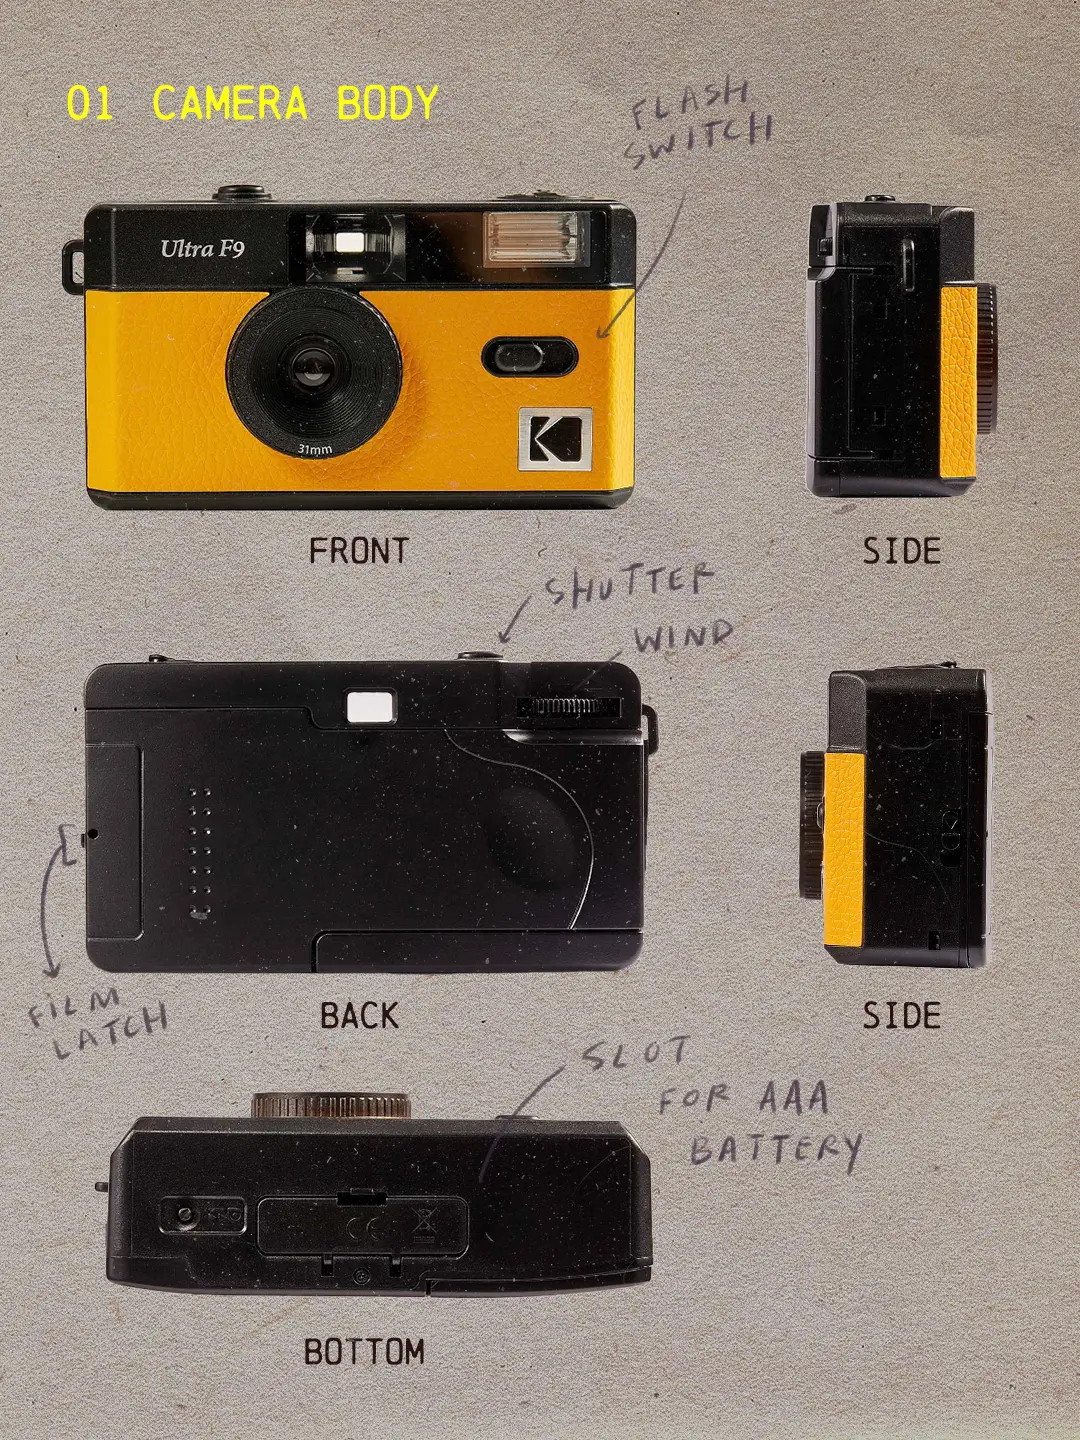 Kodak 35mm Film Camera Ultra F9 - Kodak Yellow 